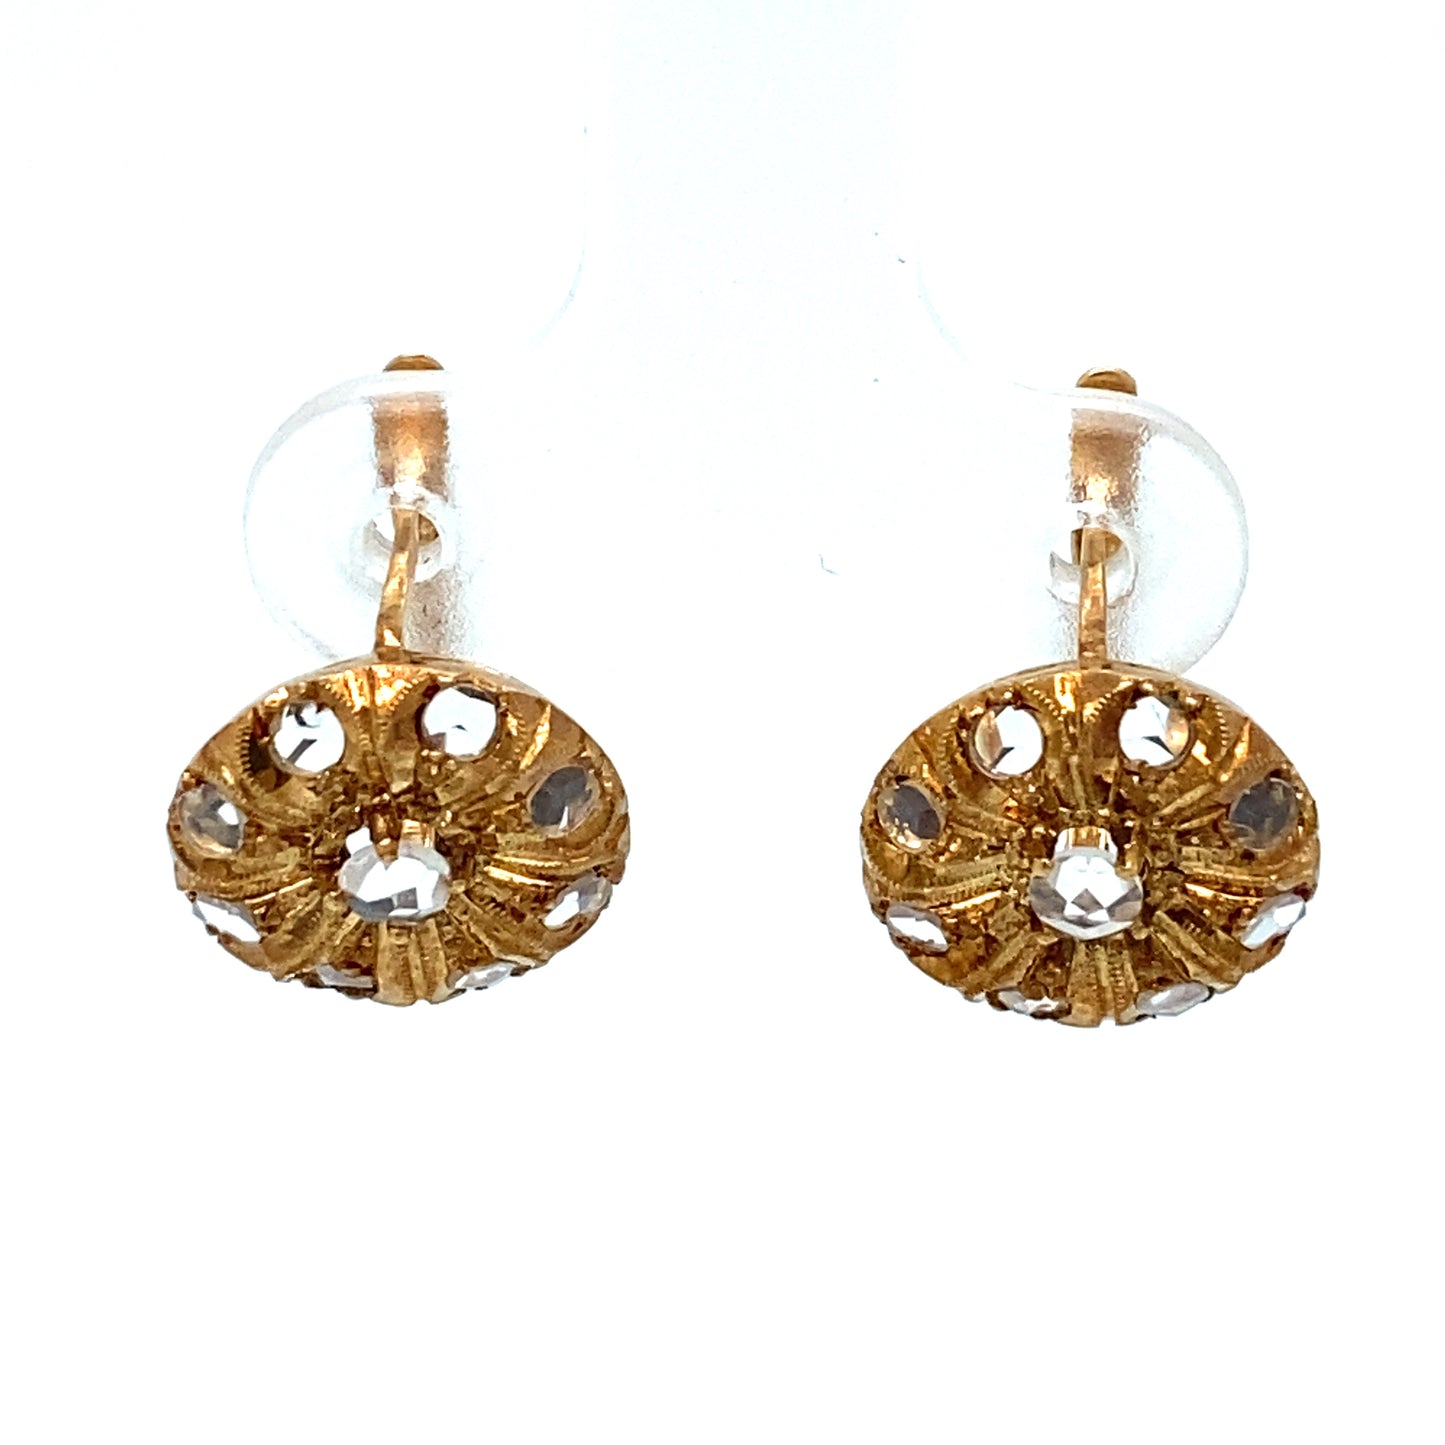 Circa 1930s Lever Back Rose Cut Diamond Dangle Earrings in 14K Gold